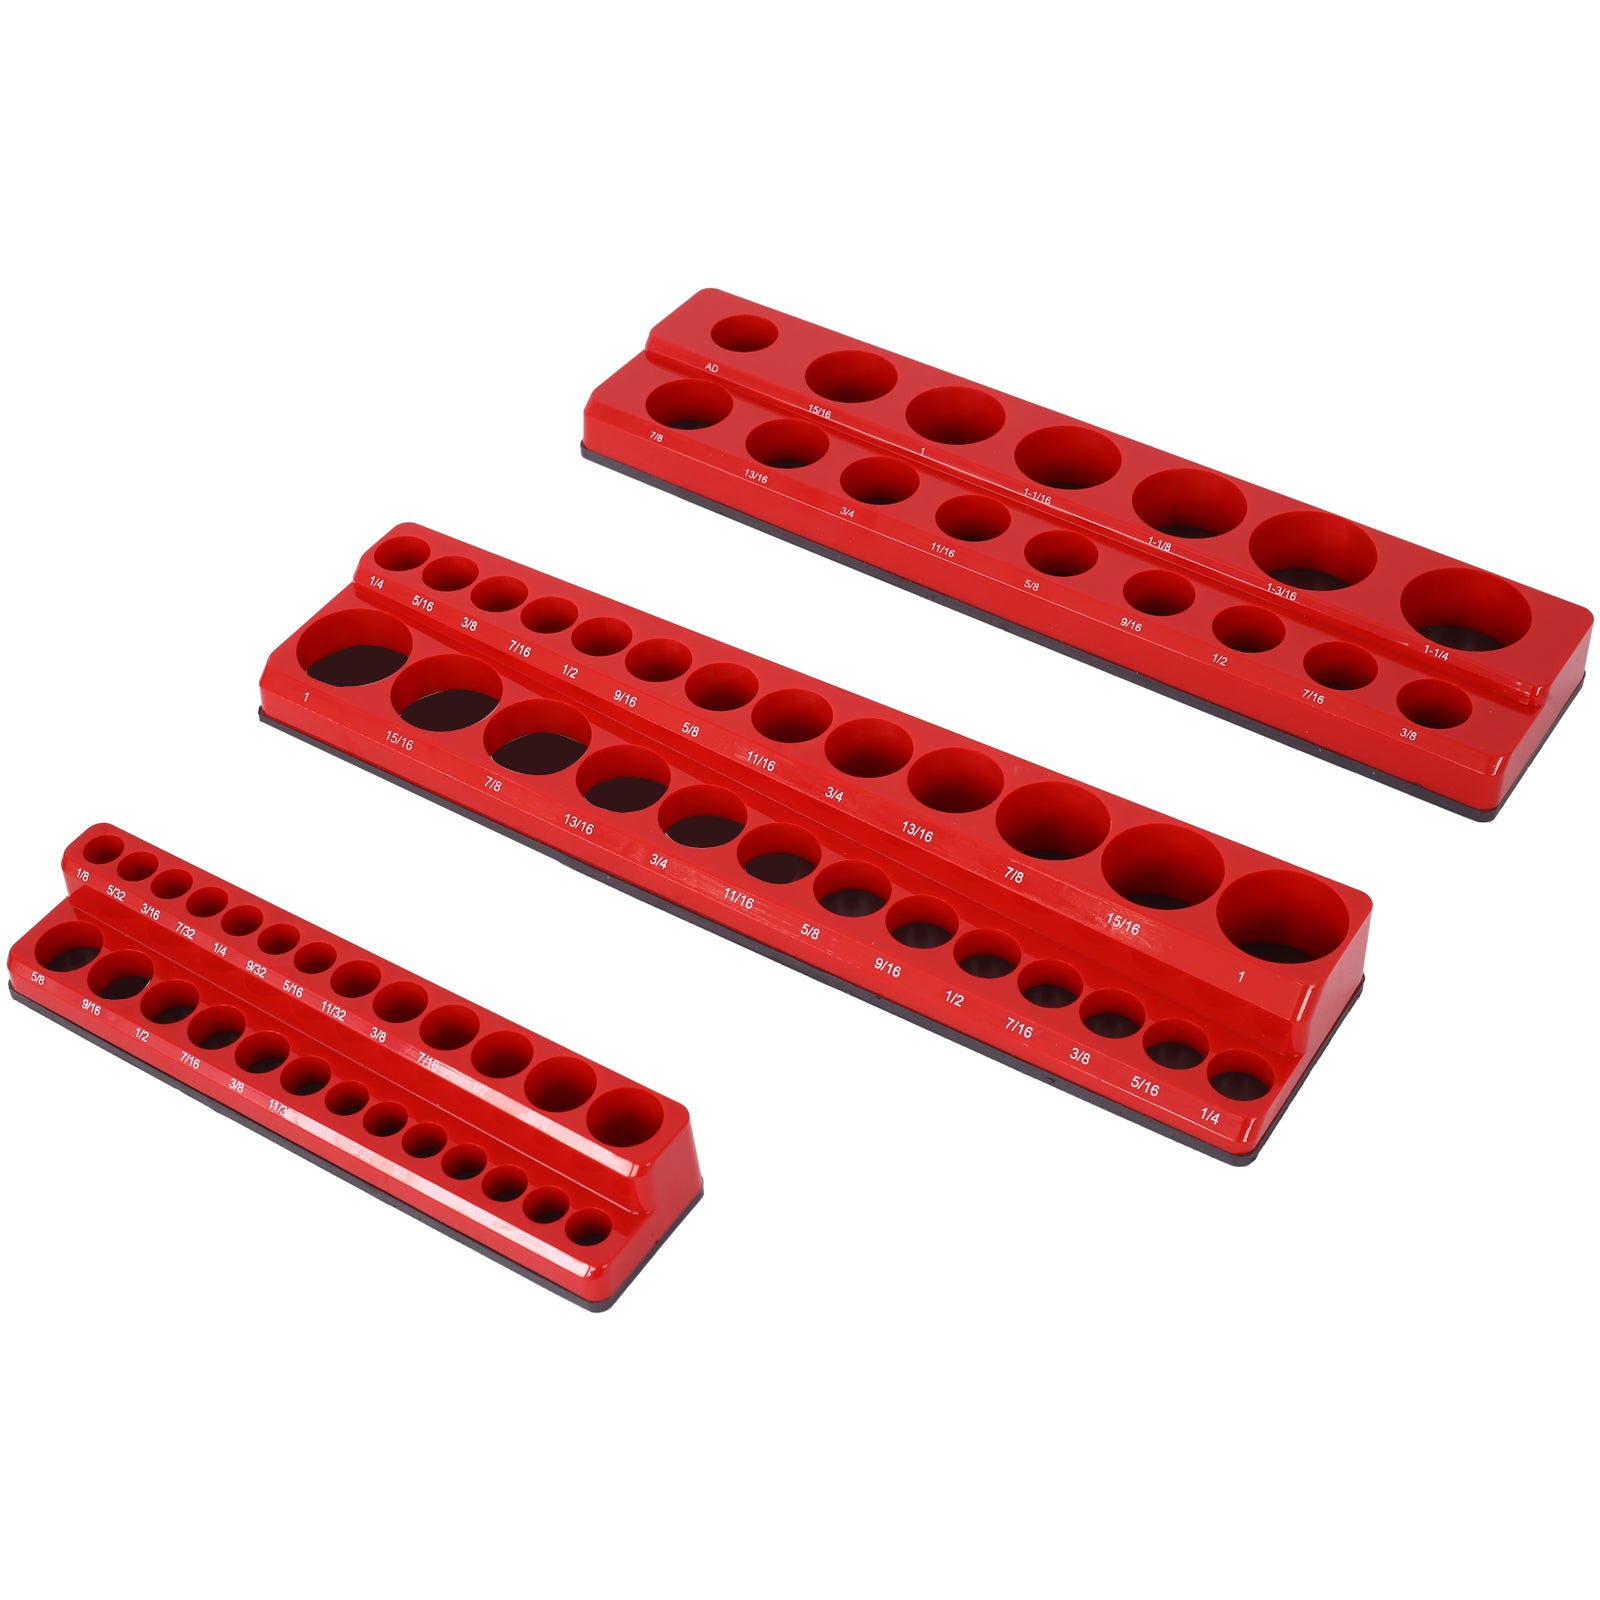 3 Piece SAE Magnetic Socket Organizers, Socket red-plastic